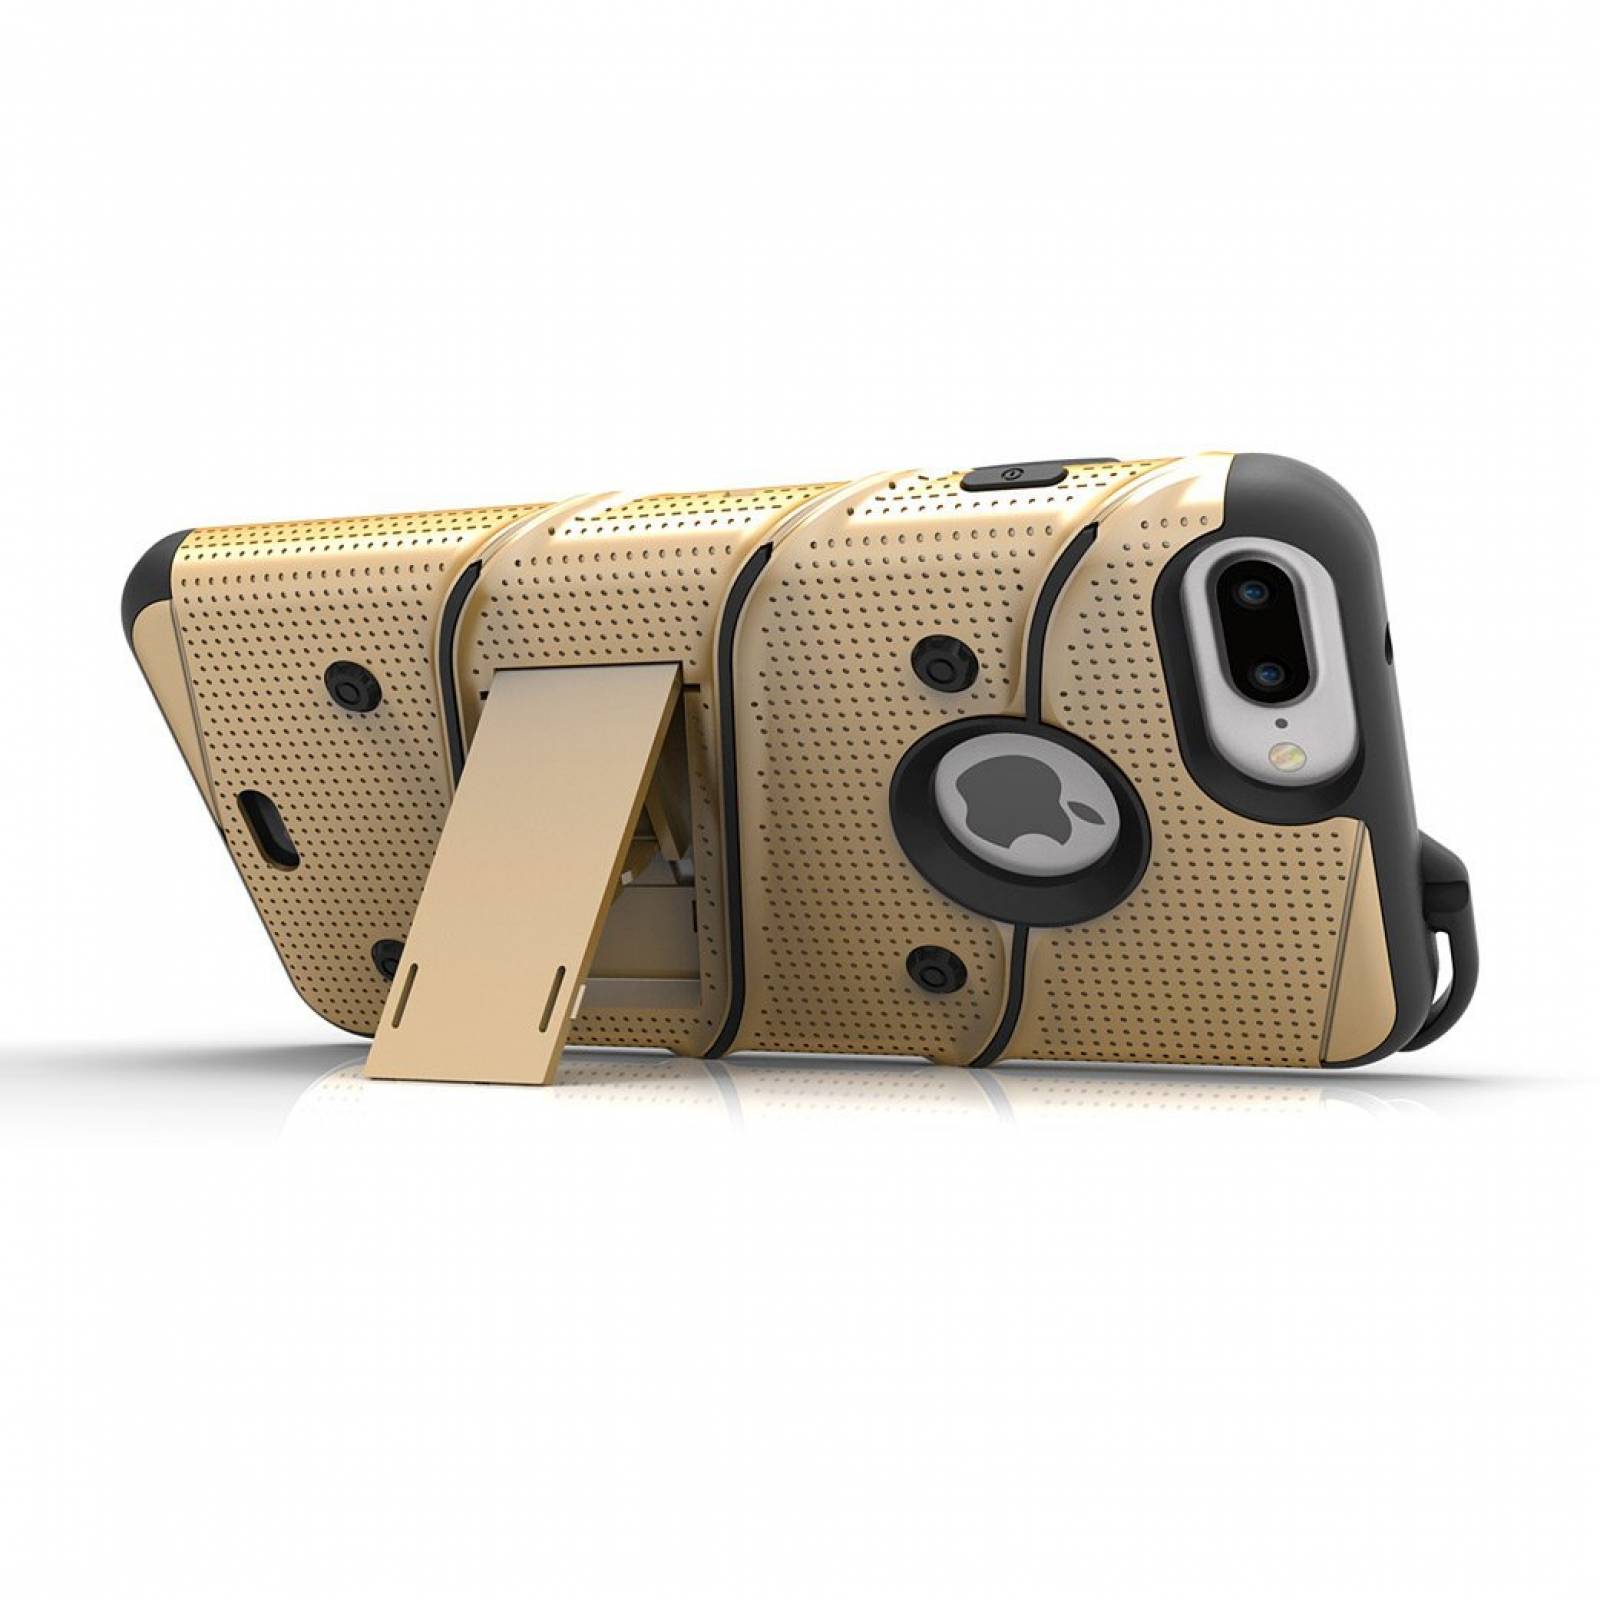 Funda Zizo Bolt para iPhone 7 Plus Clip + Protector -Dorado